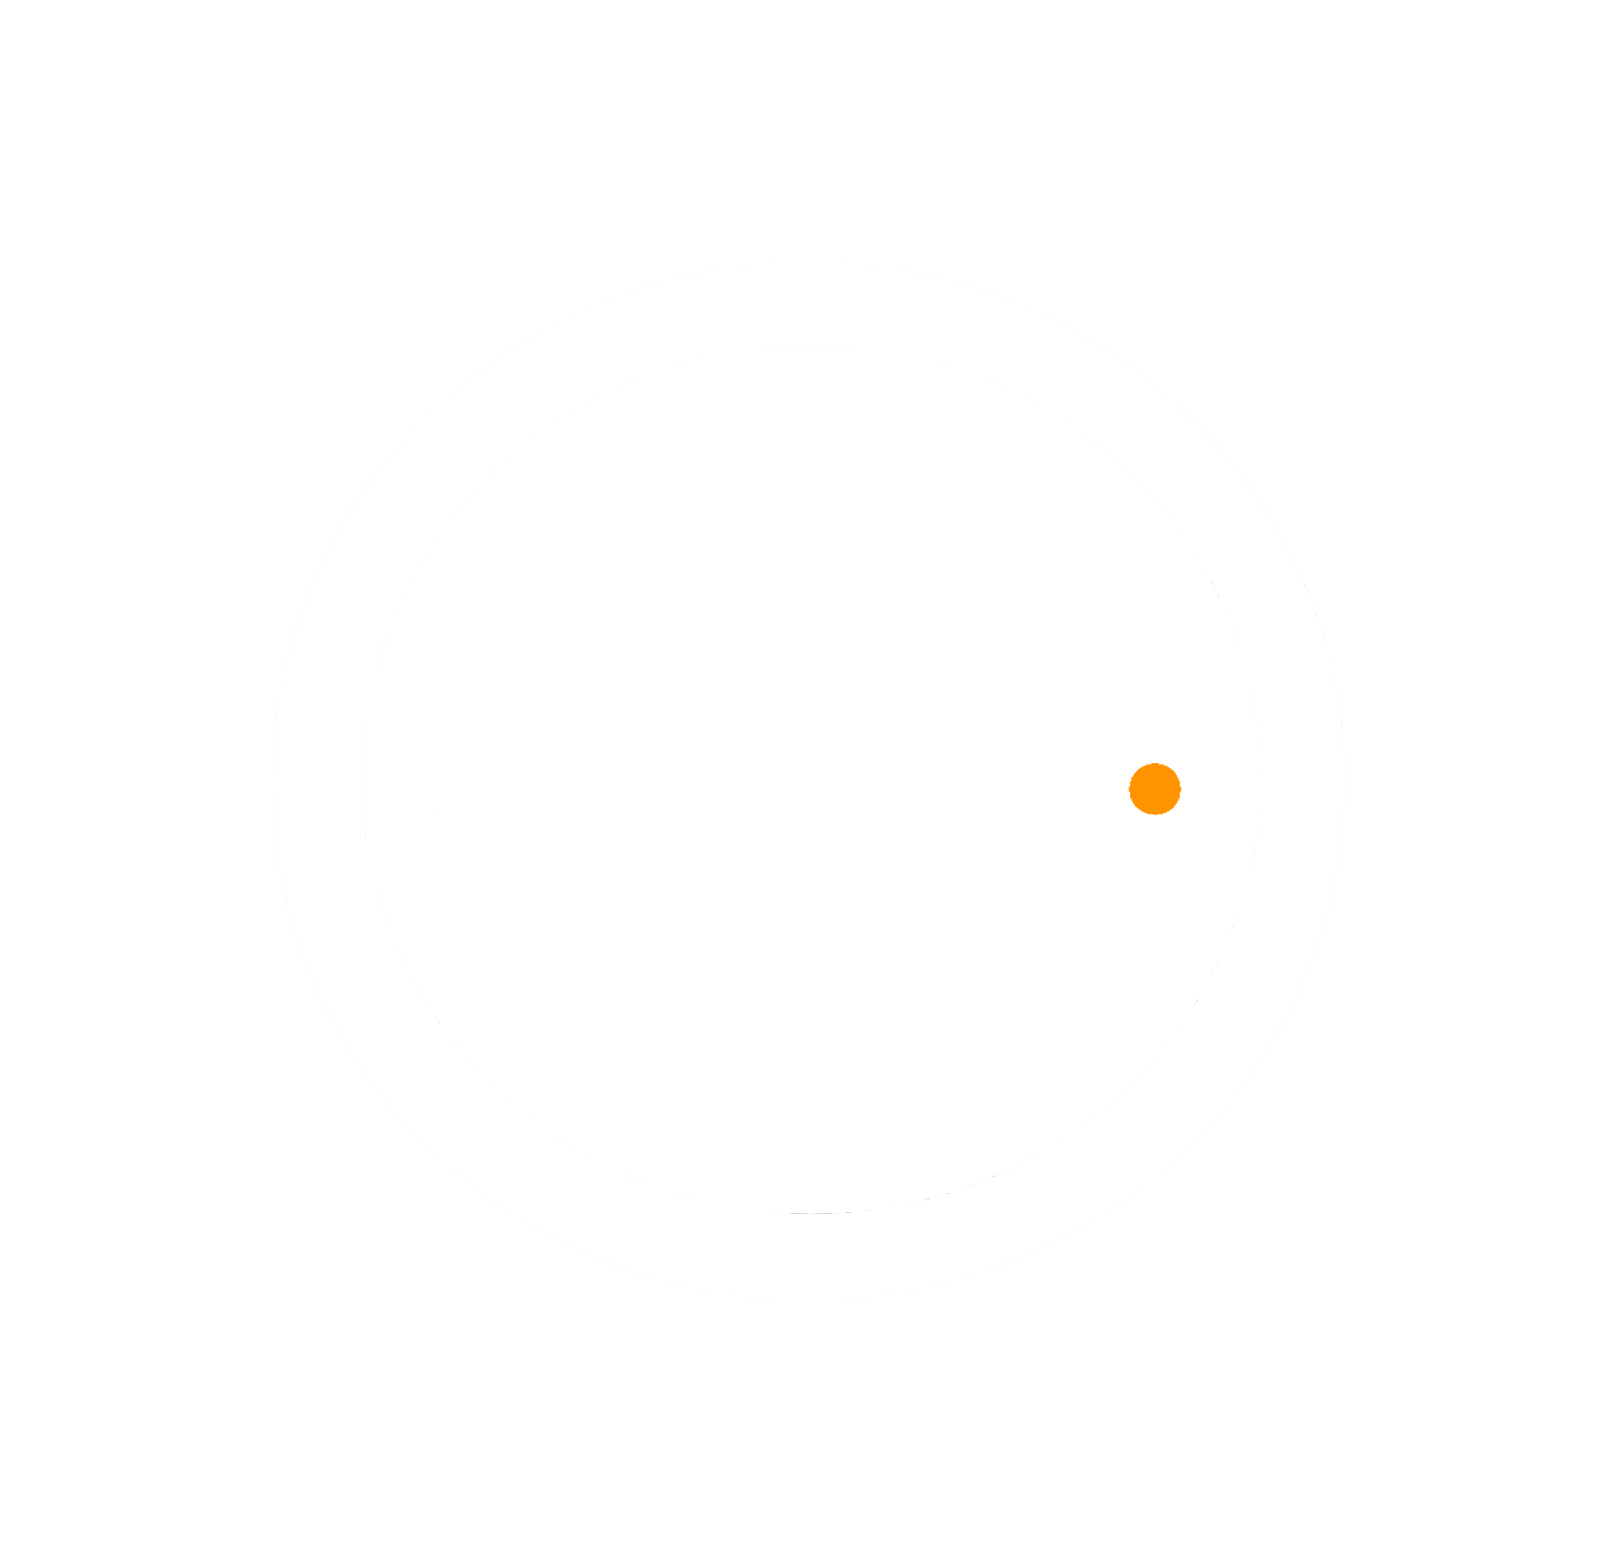 WinPeo